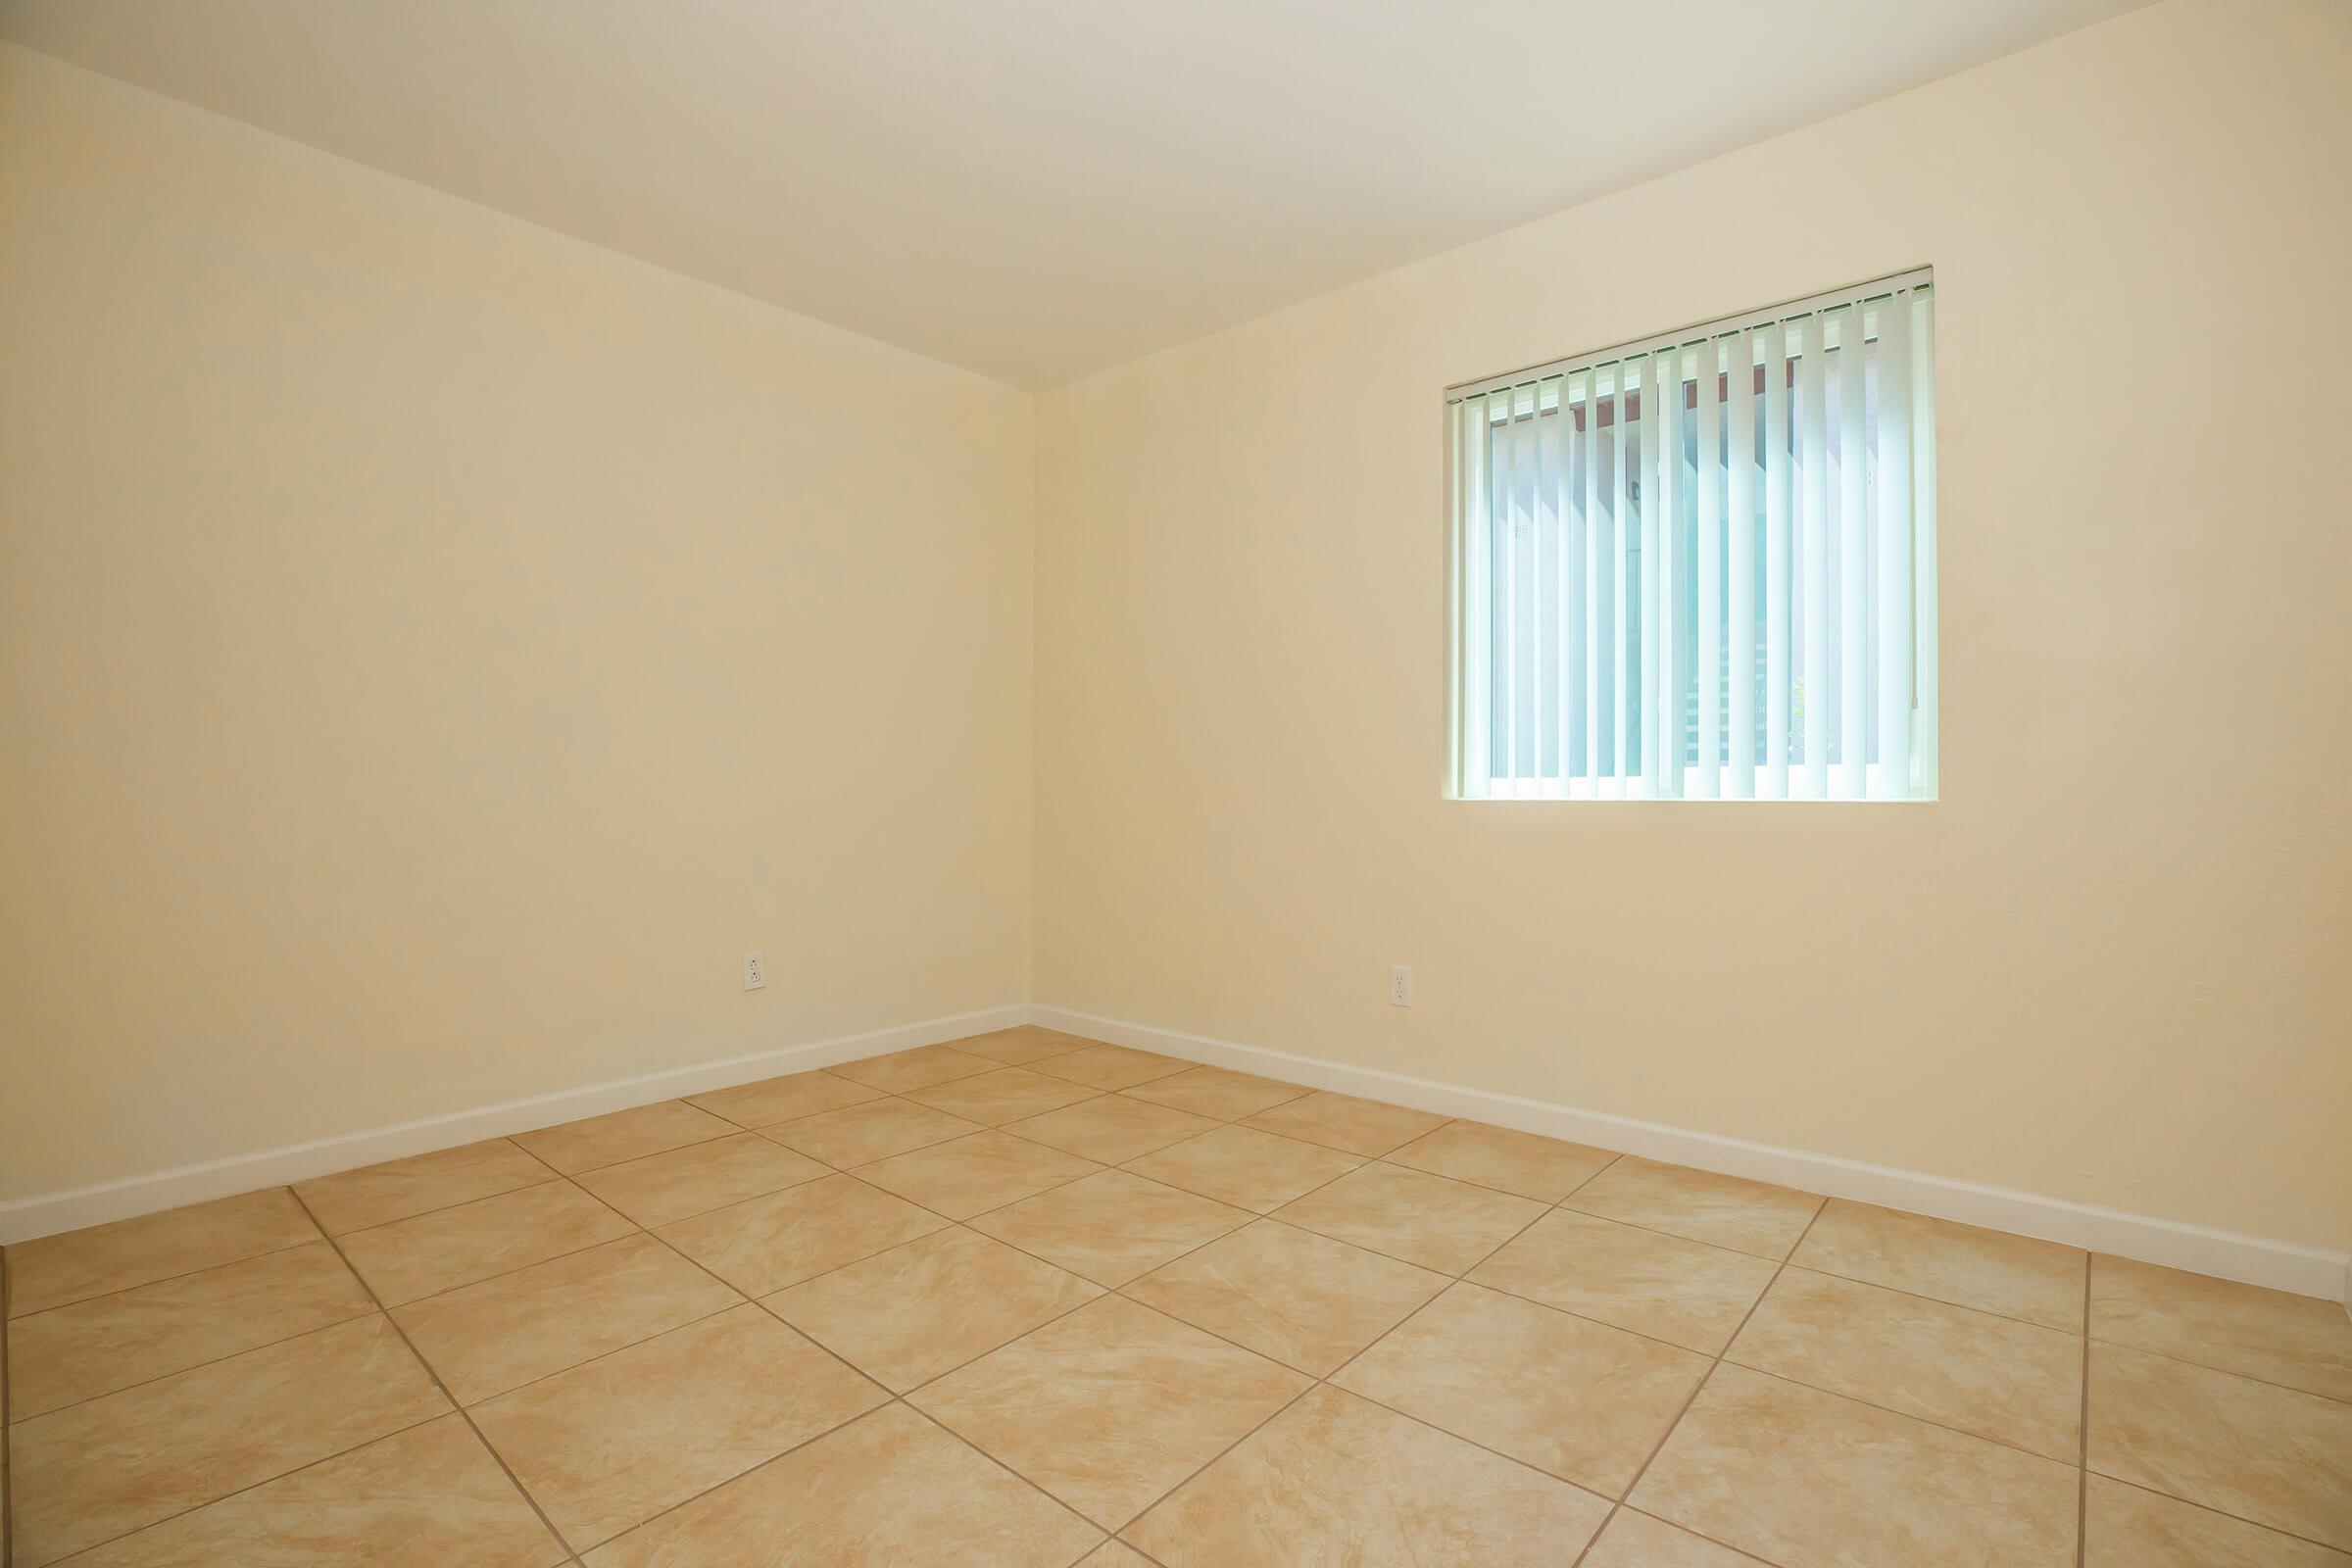 a room with a tiled floor